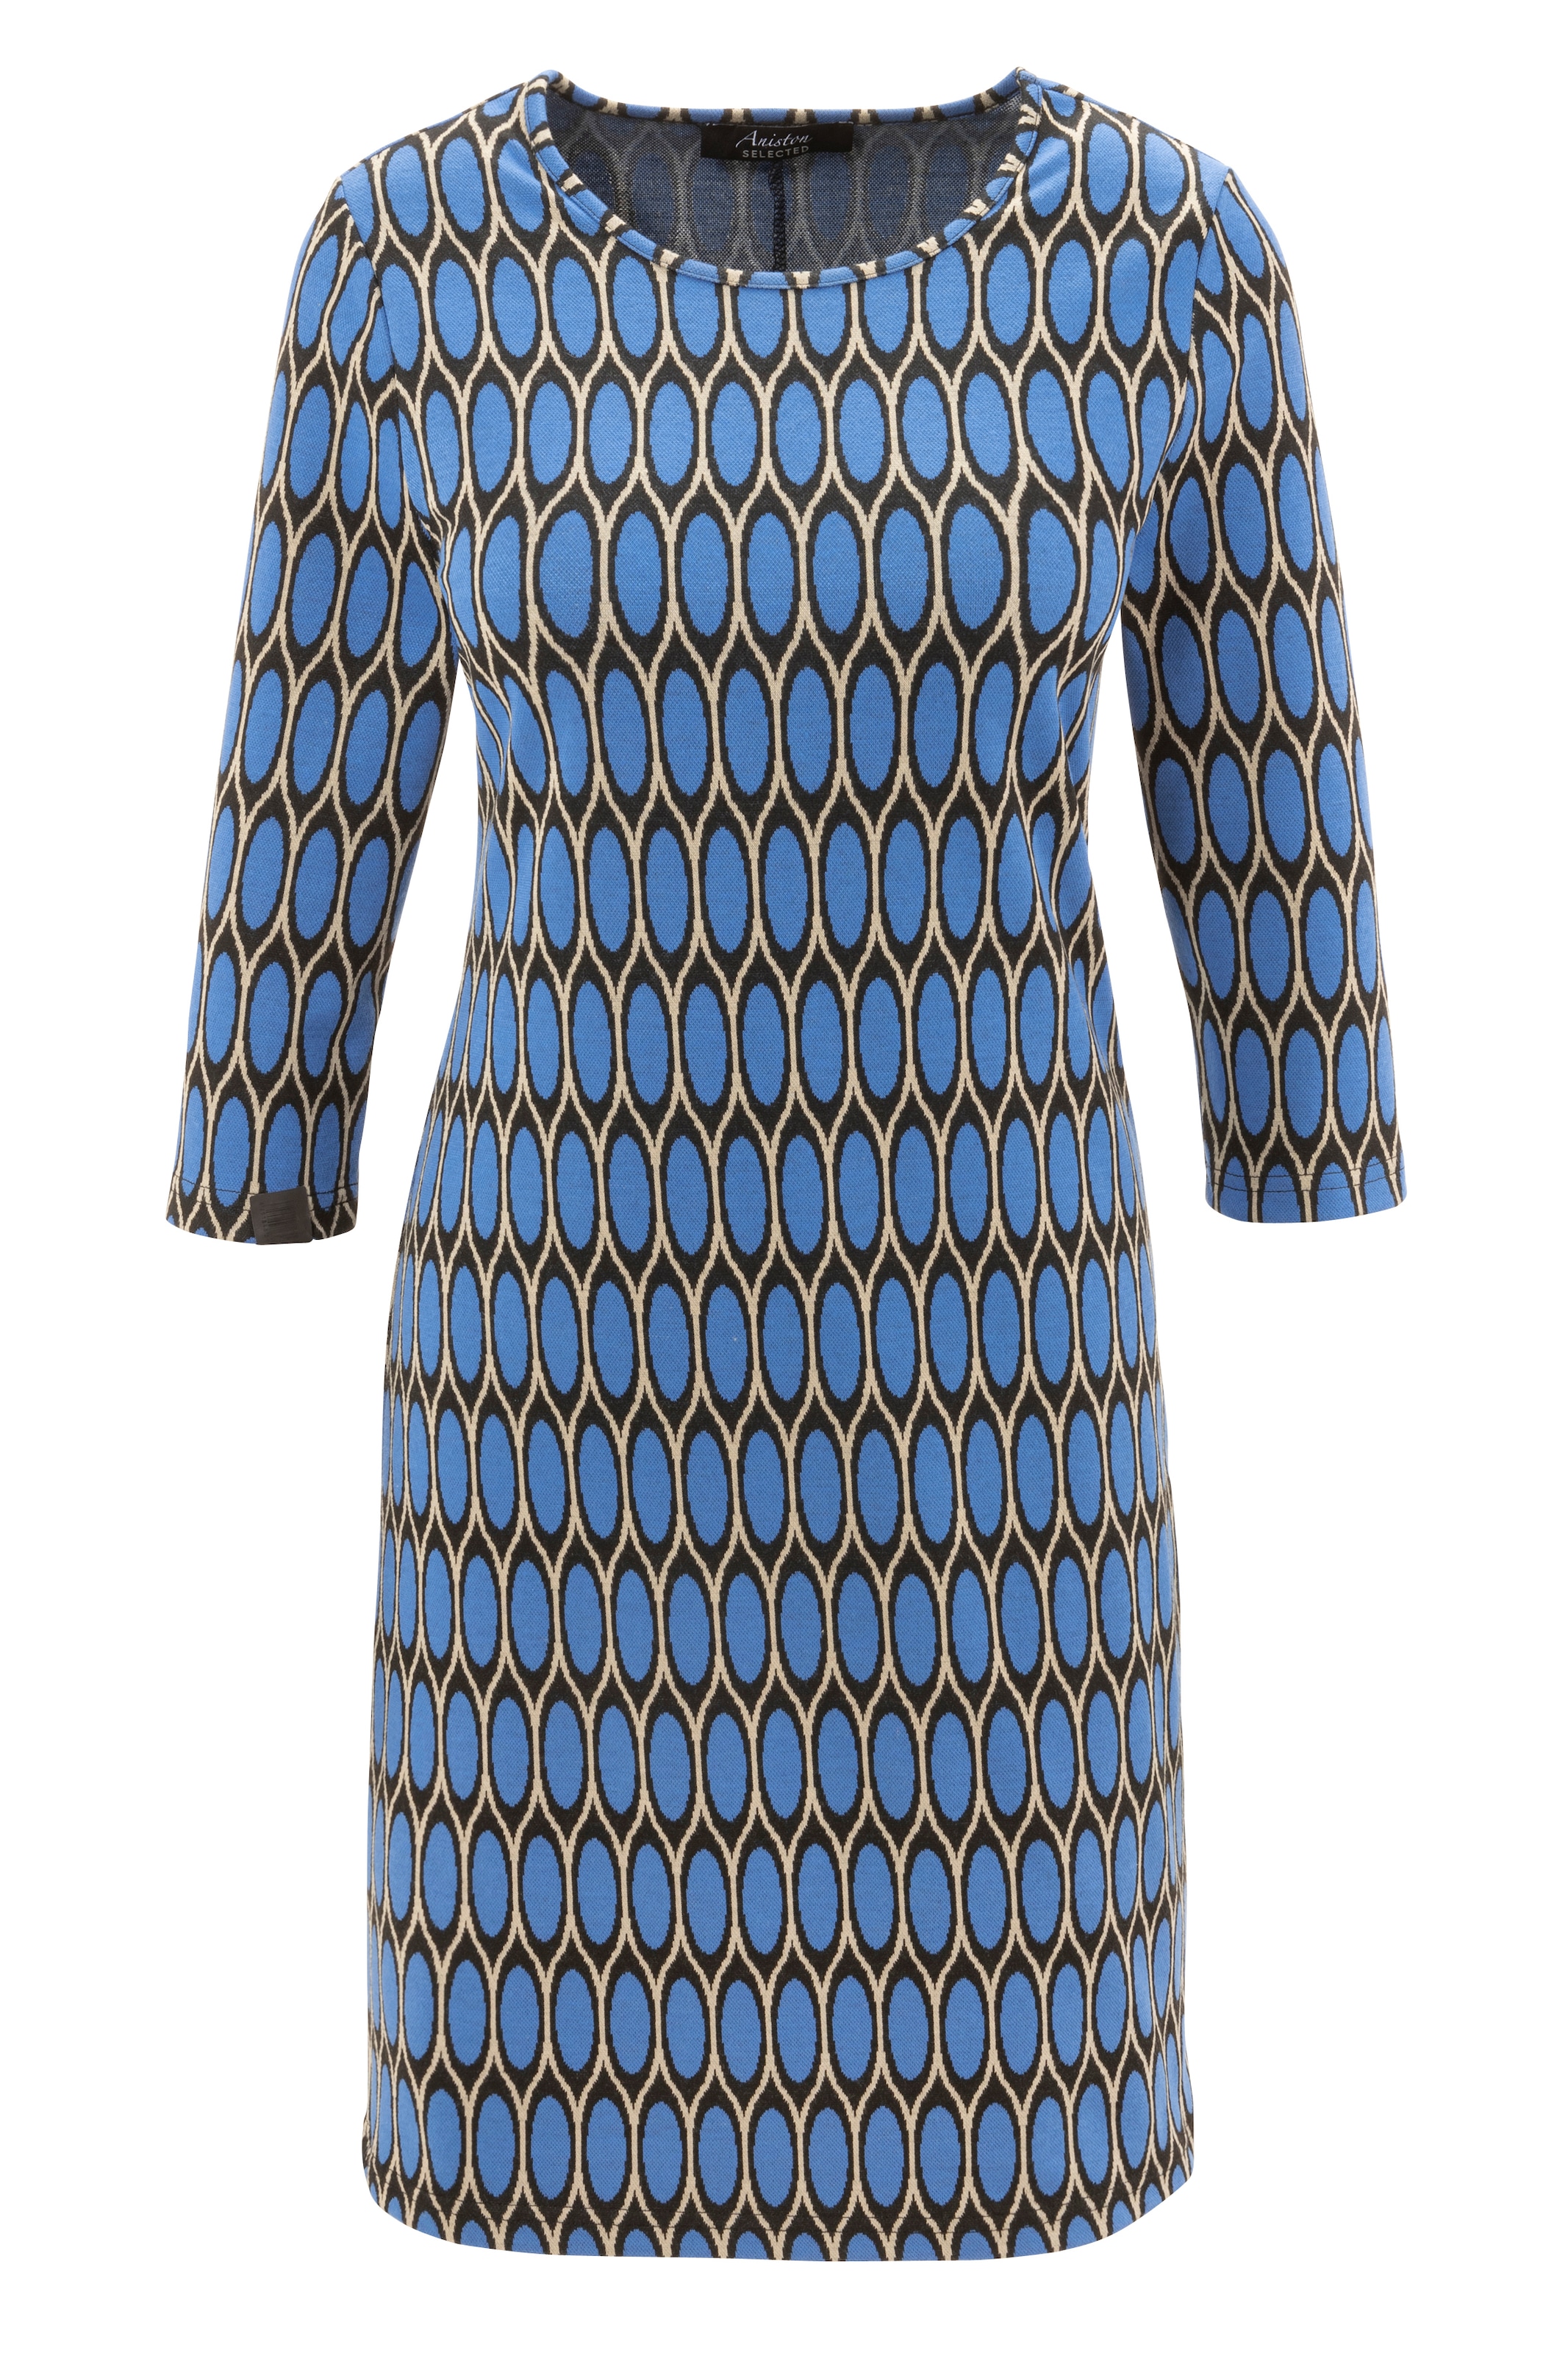 Aniston SELECTED Jerseykleid, aus Jacquard mit Retro-Muster